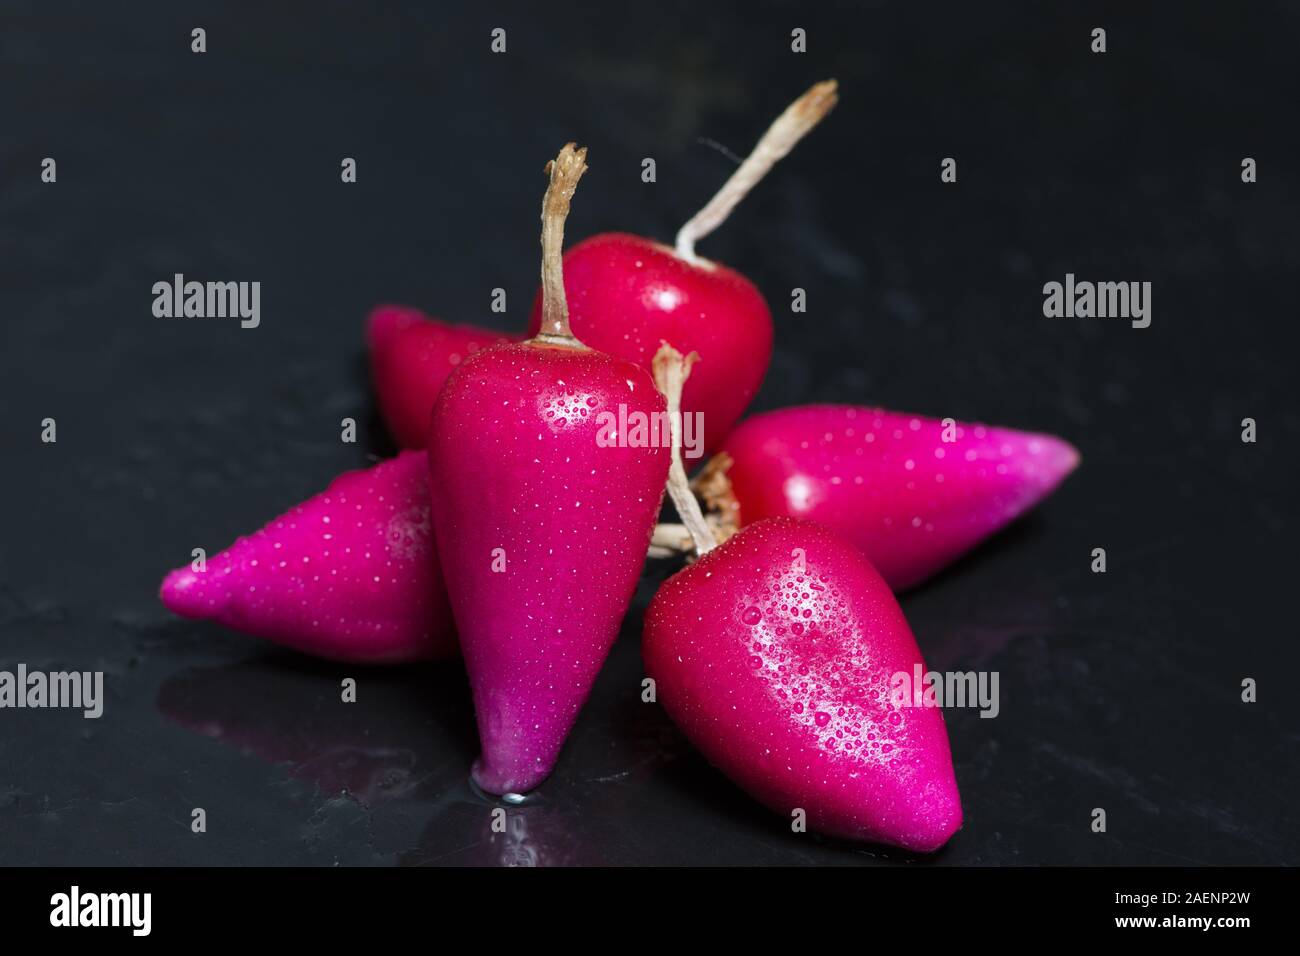 Pitiguey Pink Fruit Close up on Black background Stock Photo